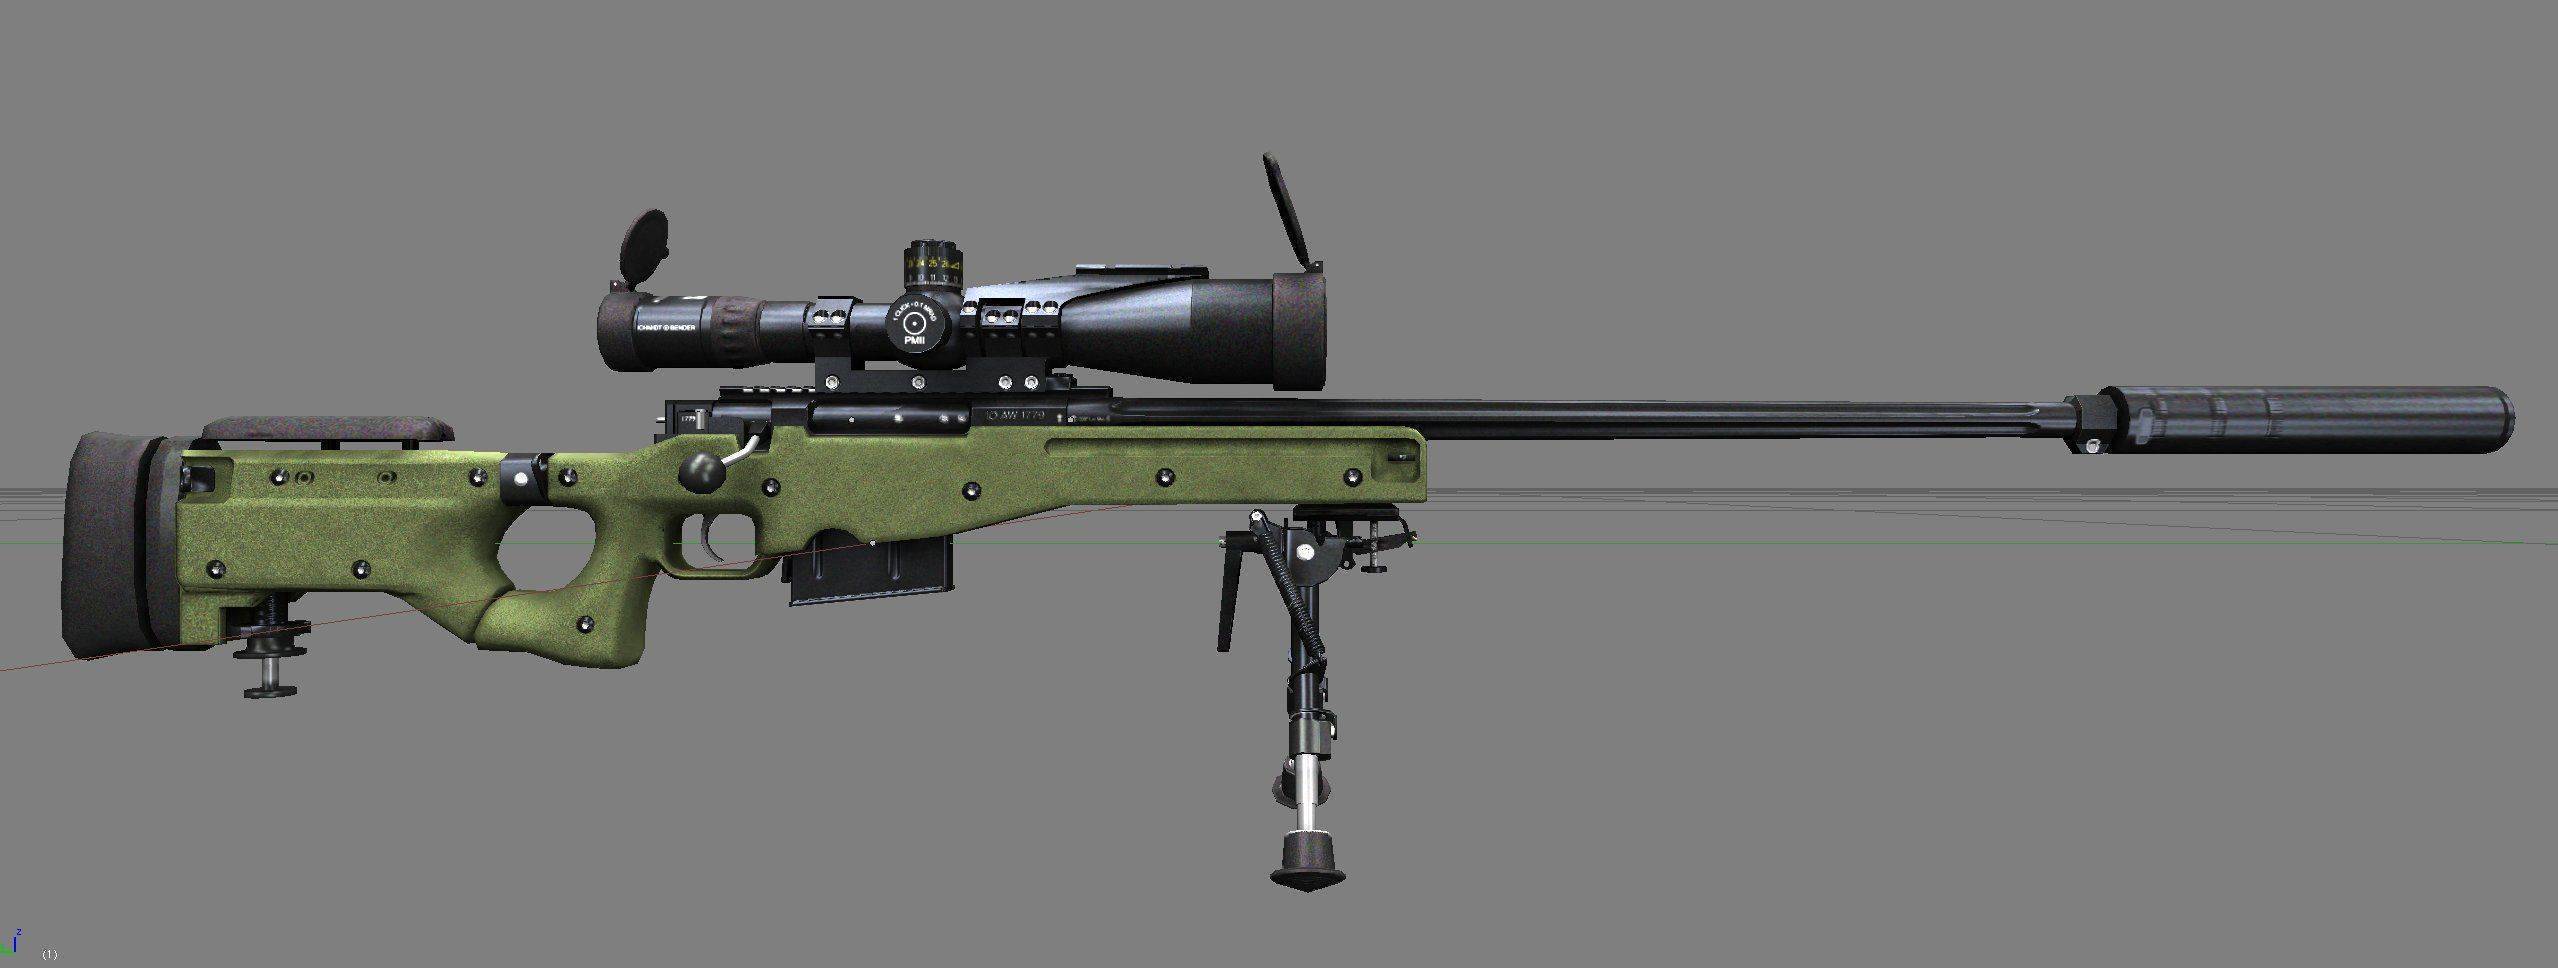 Awp снайперская винтовка википедия фото 58